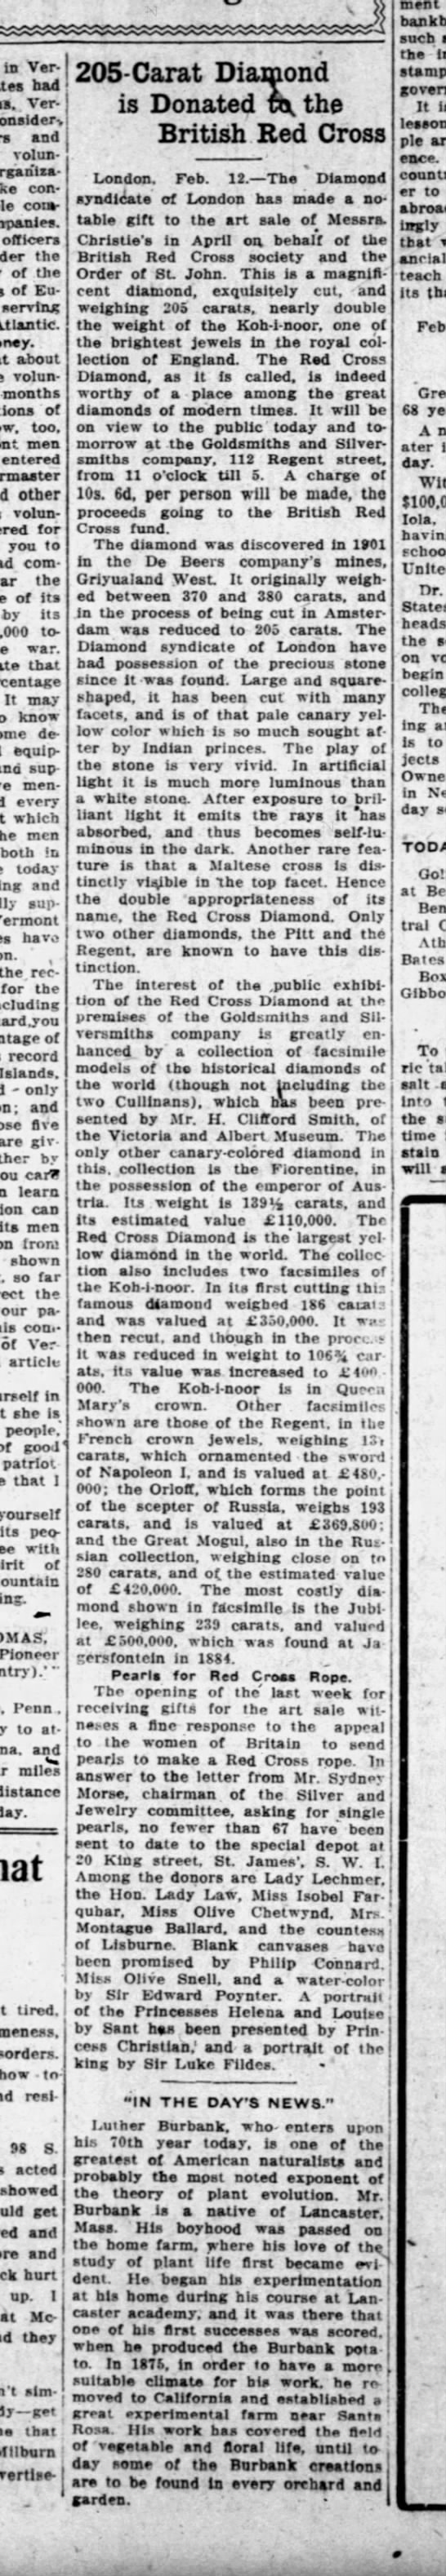 1918 news clip - 